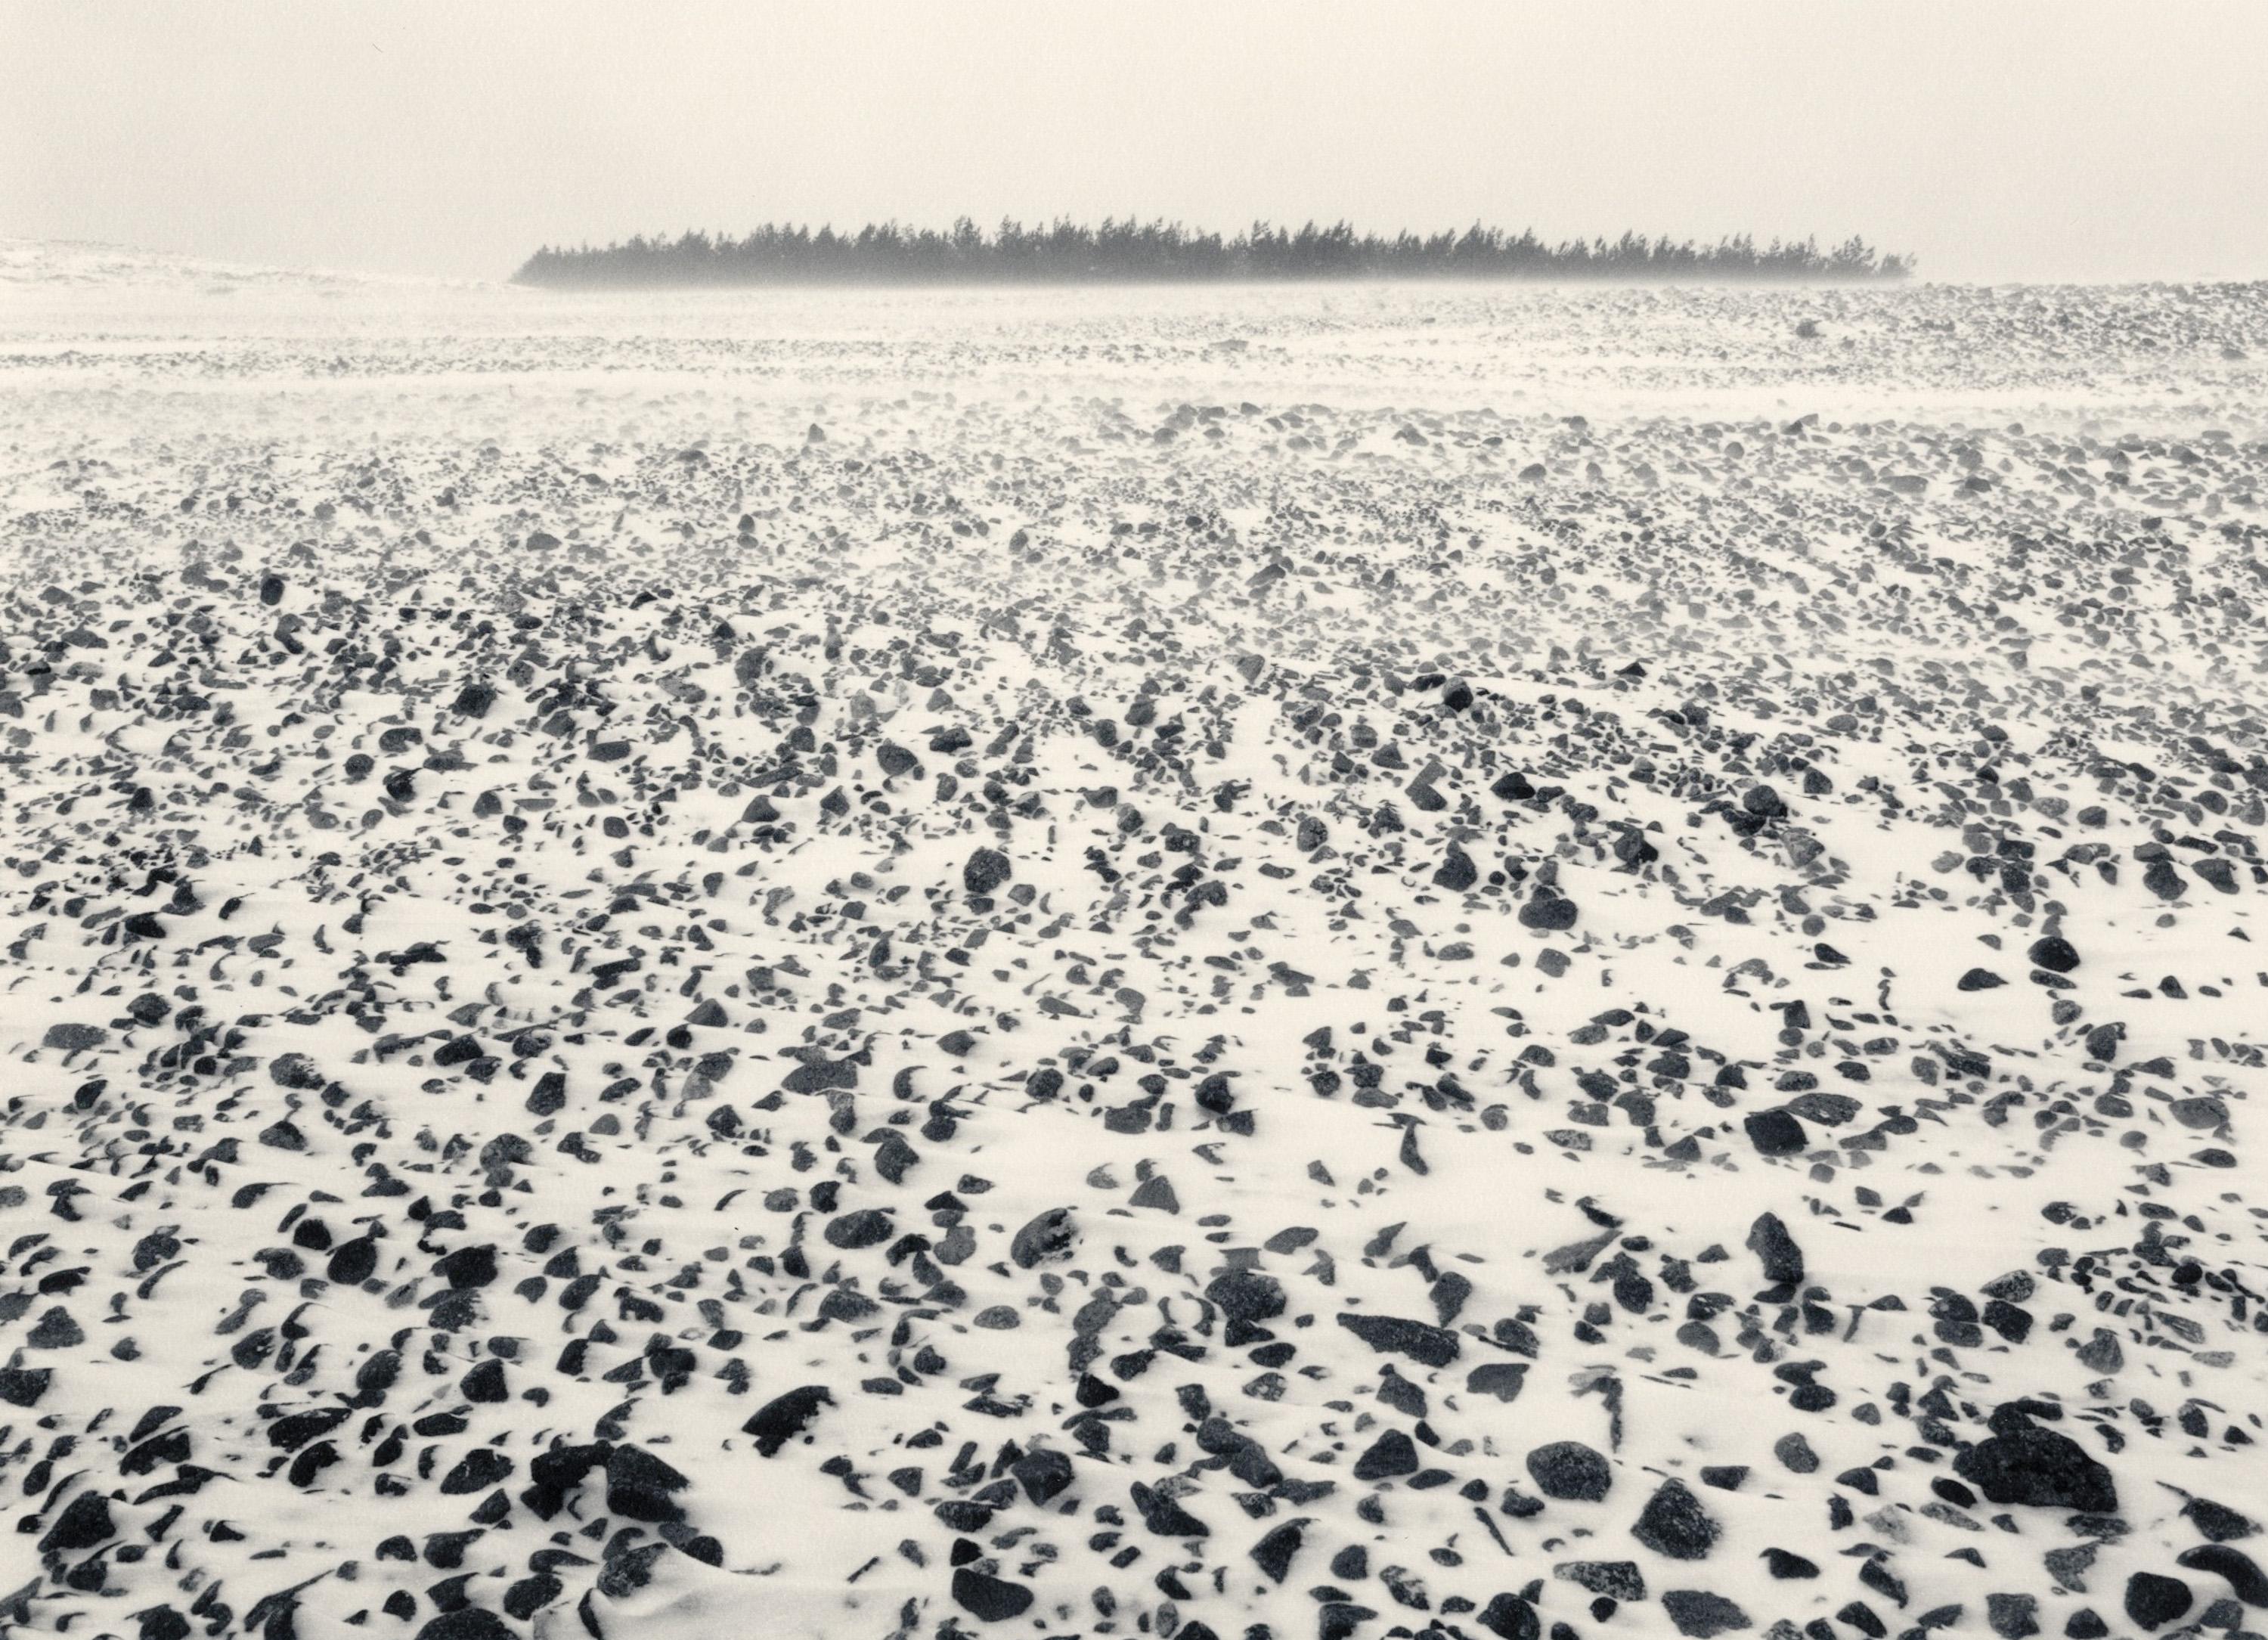 Pentti Sammallahti Black and White Photograph - Jurmo, Finland (Rocky landscape w/snow, forest on horizon)